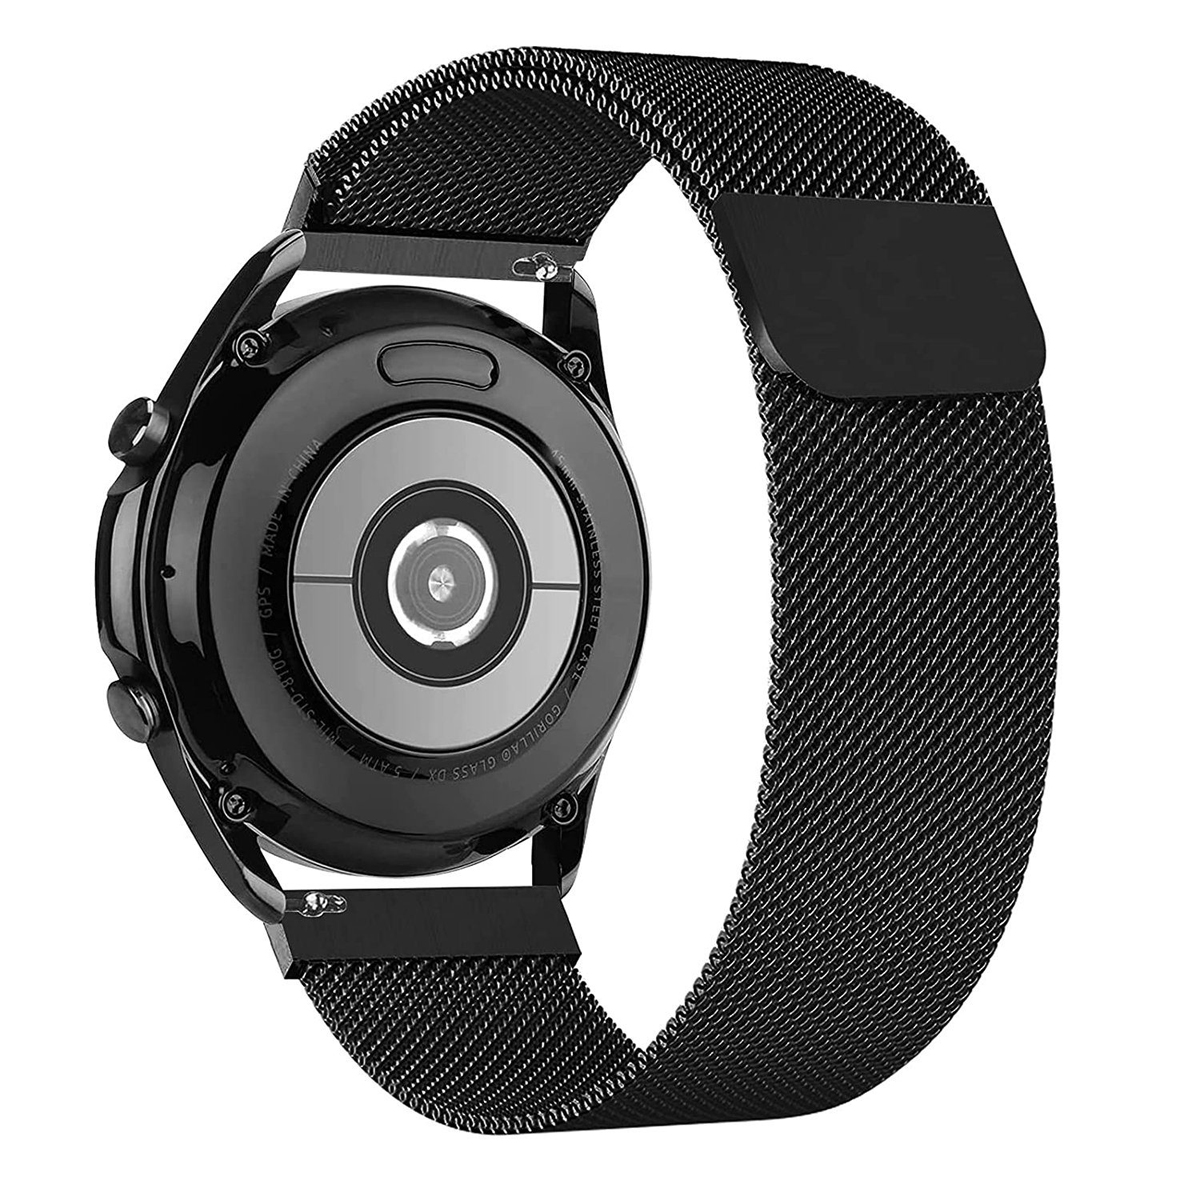 Watch GT2 Watch DIIDA Huawei, Milan-Armband,22mm, Band,Uhrenarmbänder,Huawei Schwarz Smartwatch-Armband 22mm, Ersatzarmband,